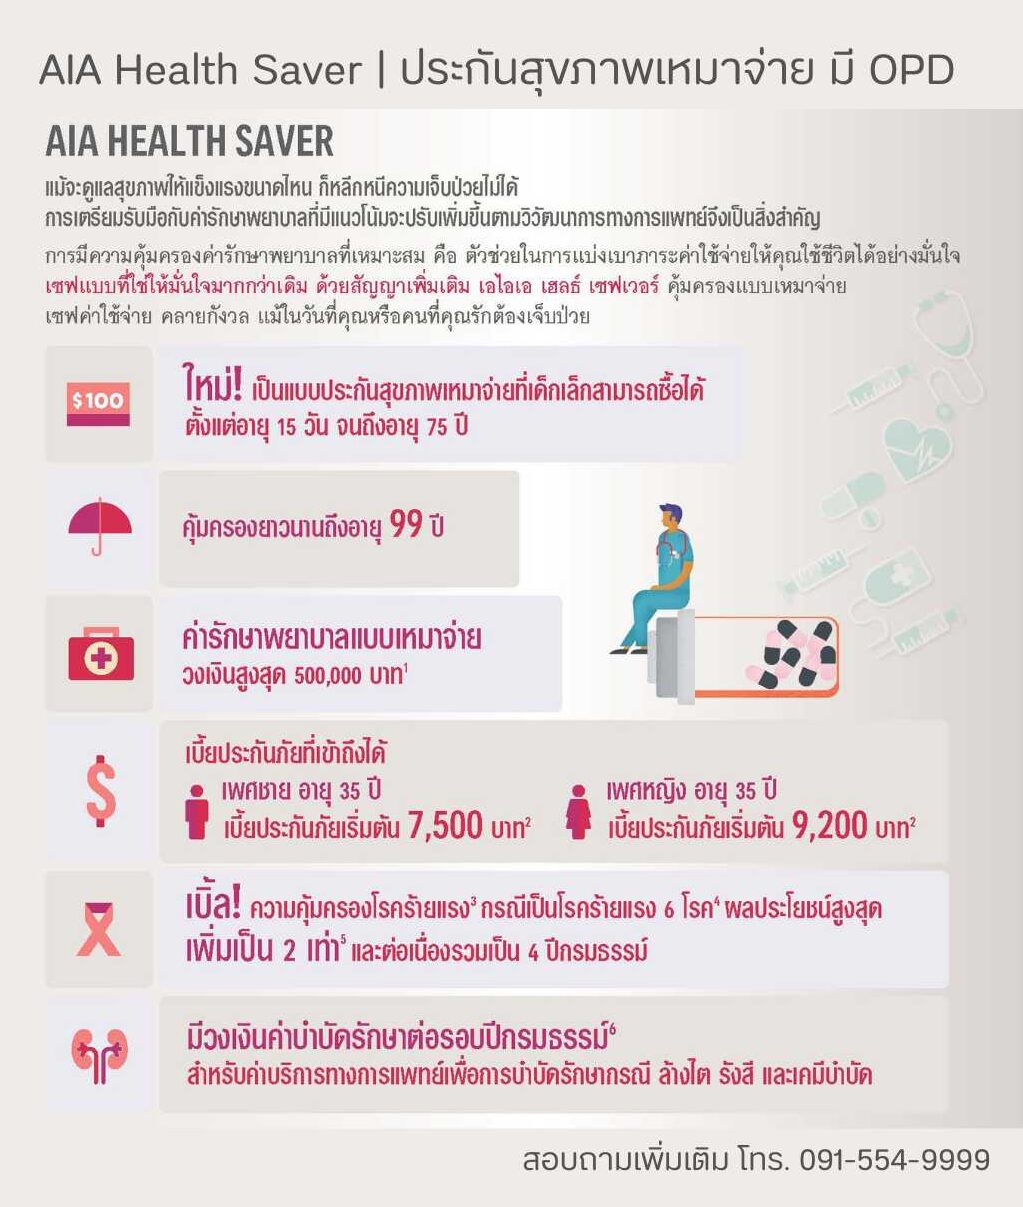 AIA Health Saver ประกันสุขภาพเหมาจ่าย มี OPD